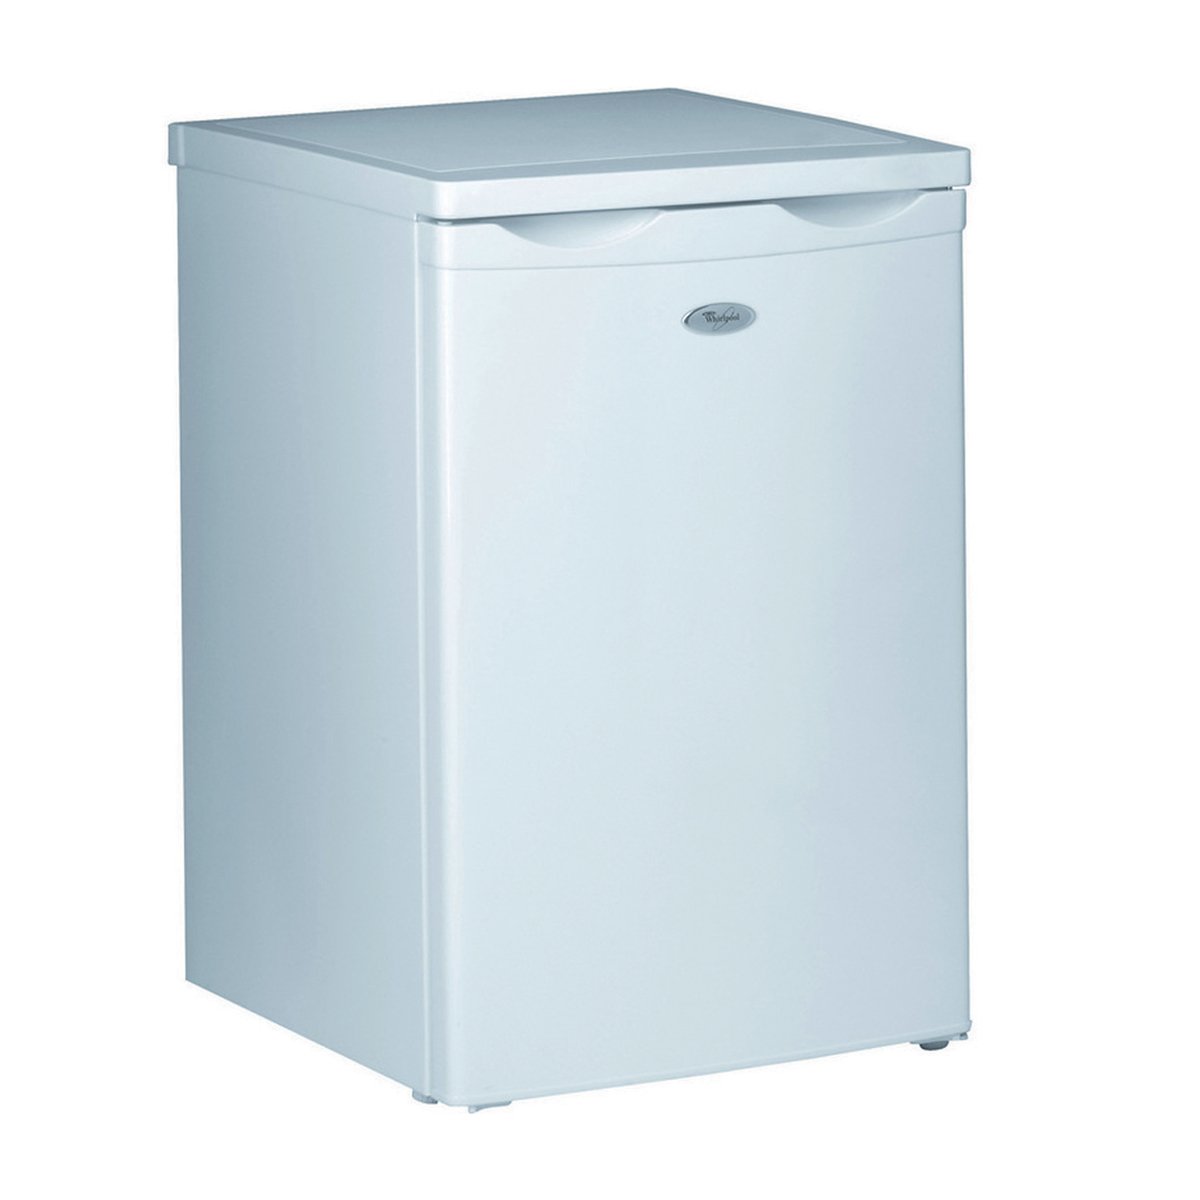 Whirlpool Single Door Refrigerator WMT504 100Ltr